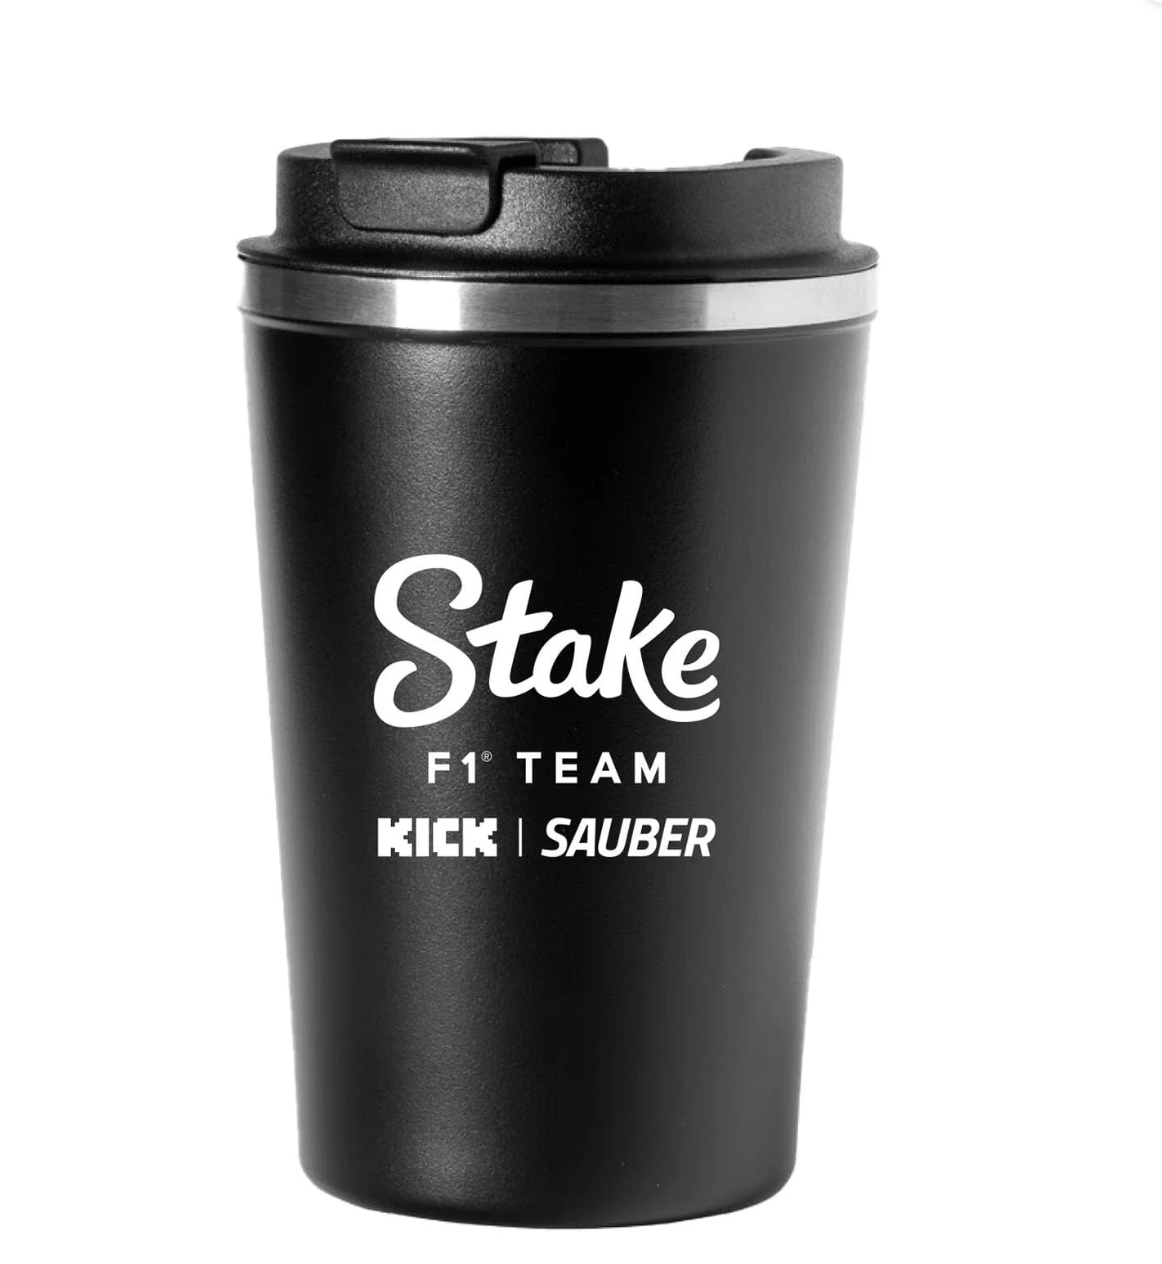 Stake F1 Kick Sauber Coffee Mug